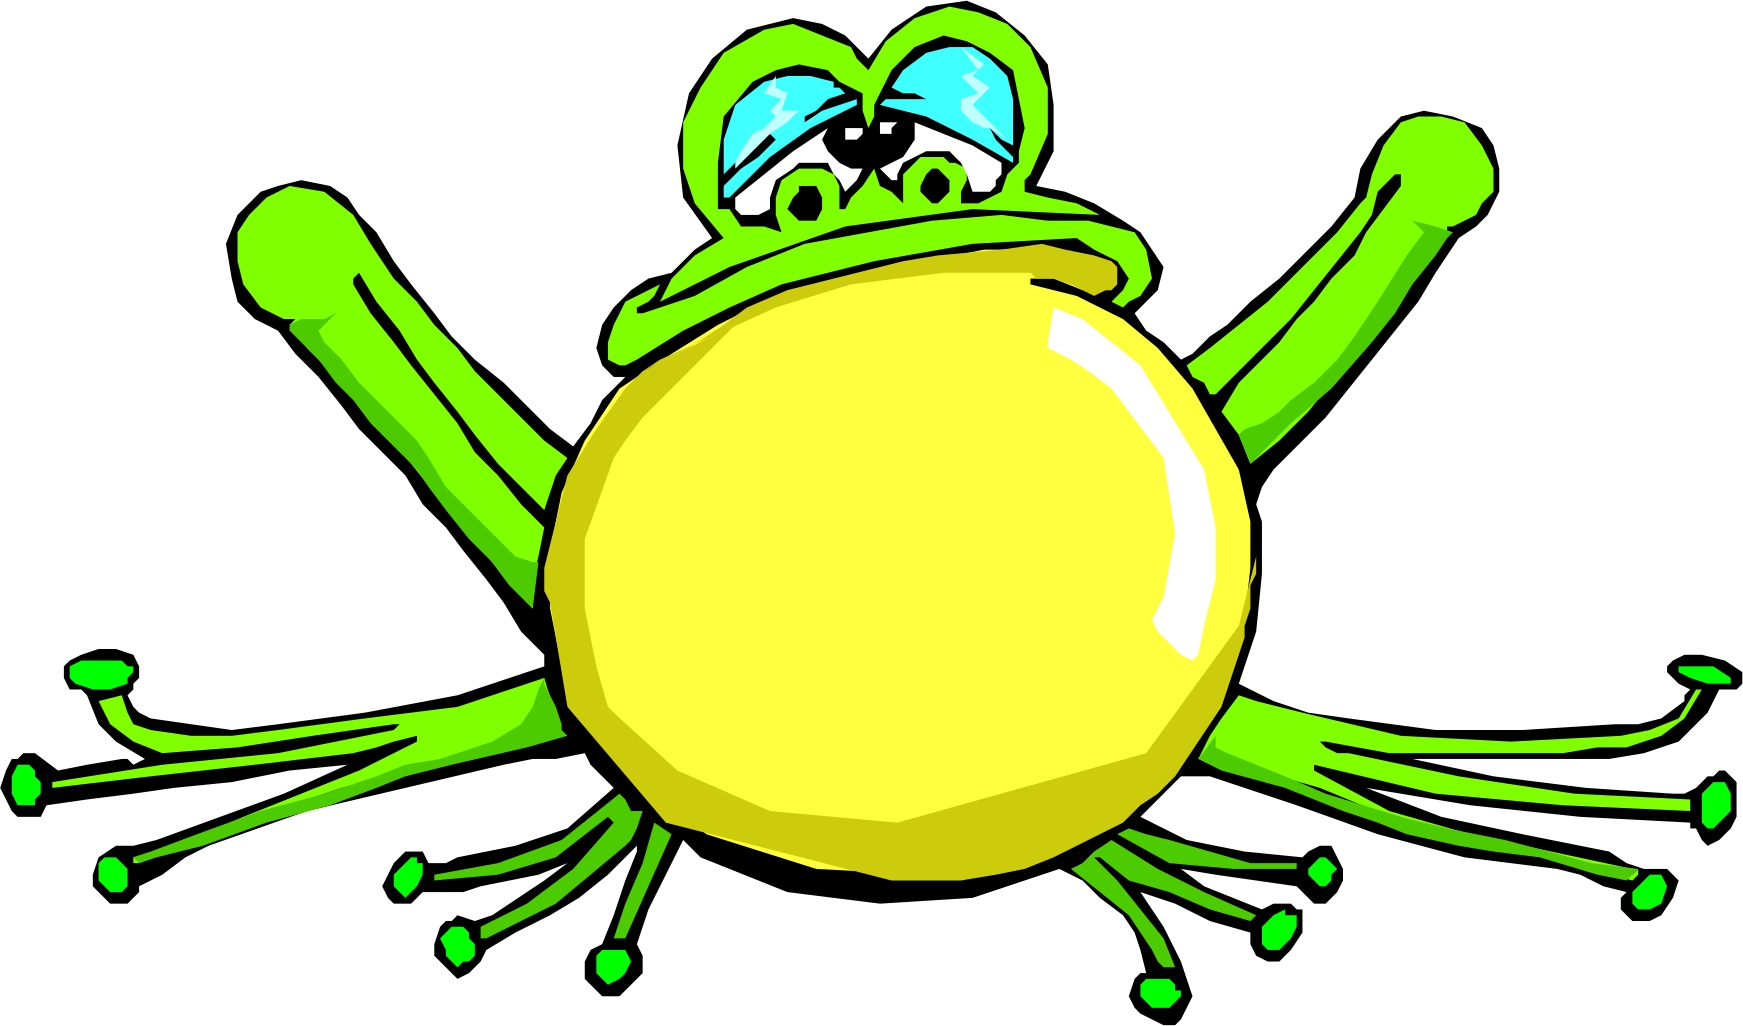 Cartoons Of Frogs - ClipArt Best